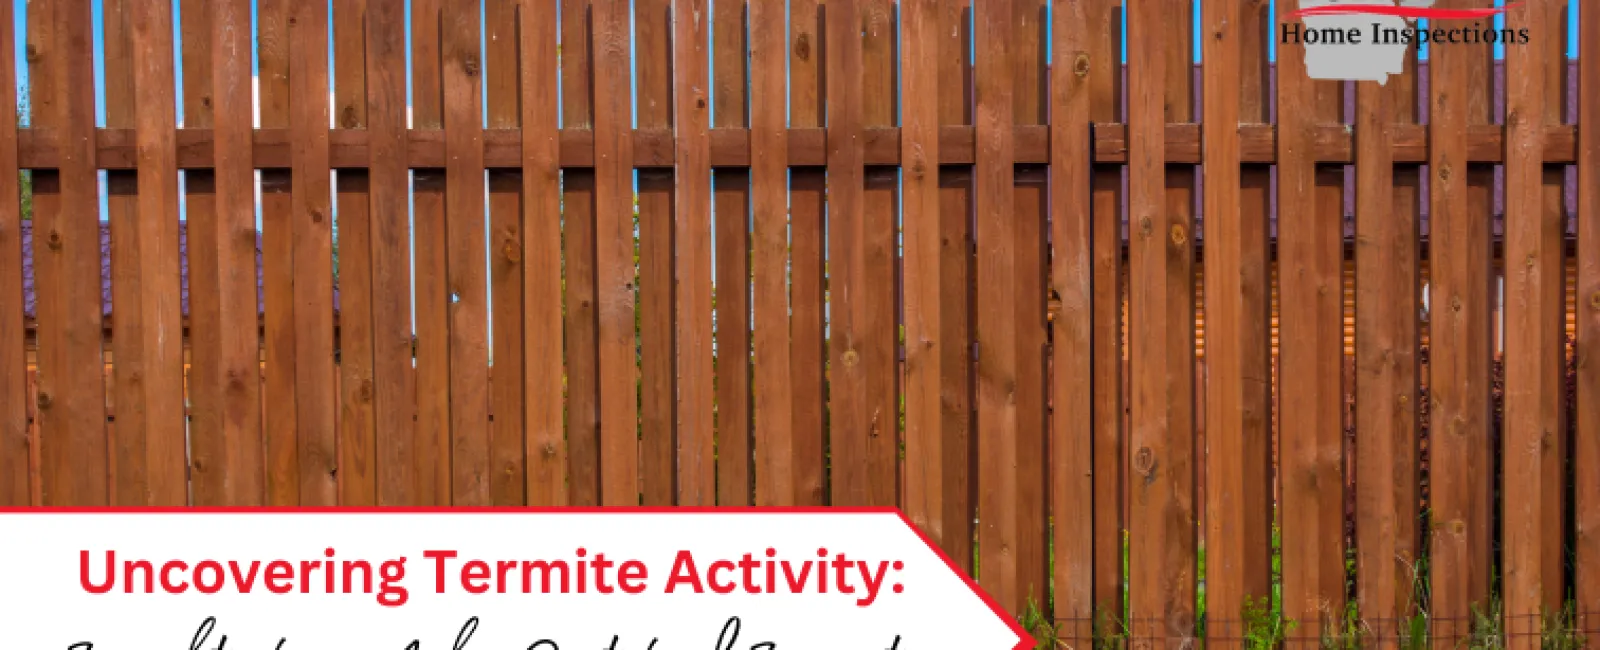 Uncovering Termite Activity